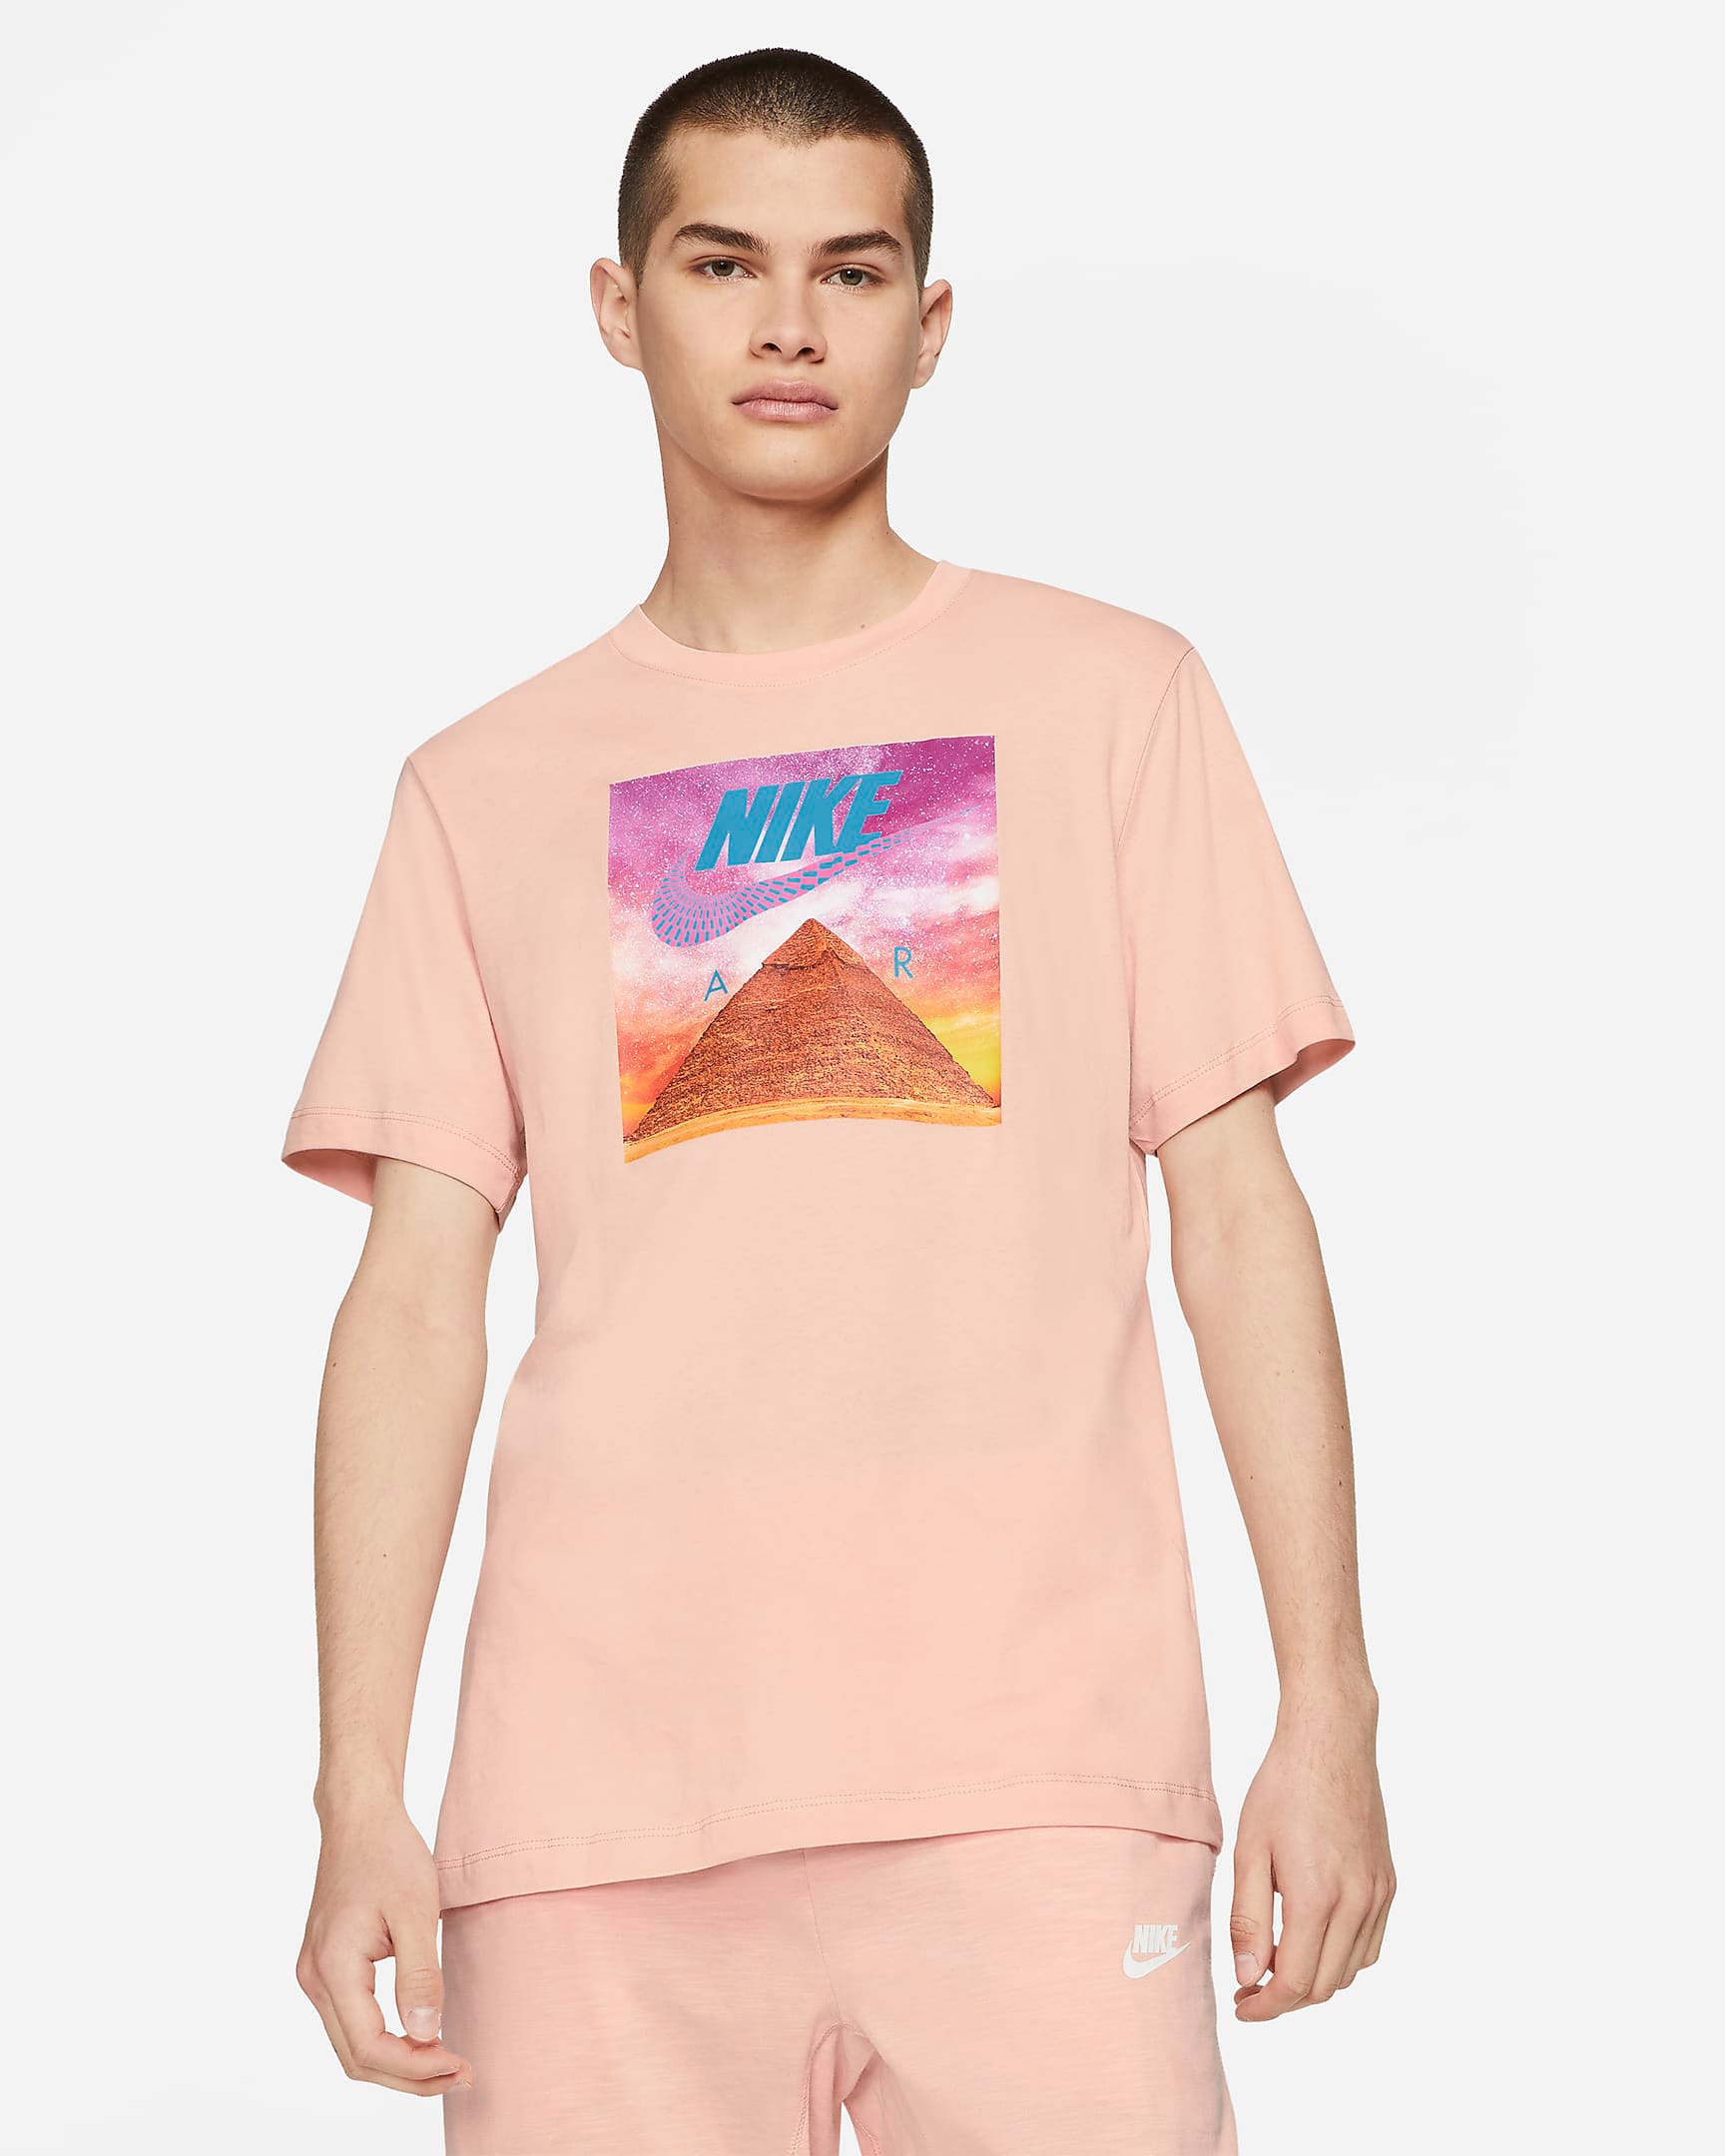 nike-arctic-orange-pyramid-t-shirt